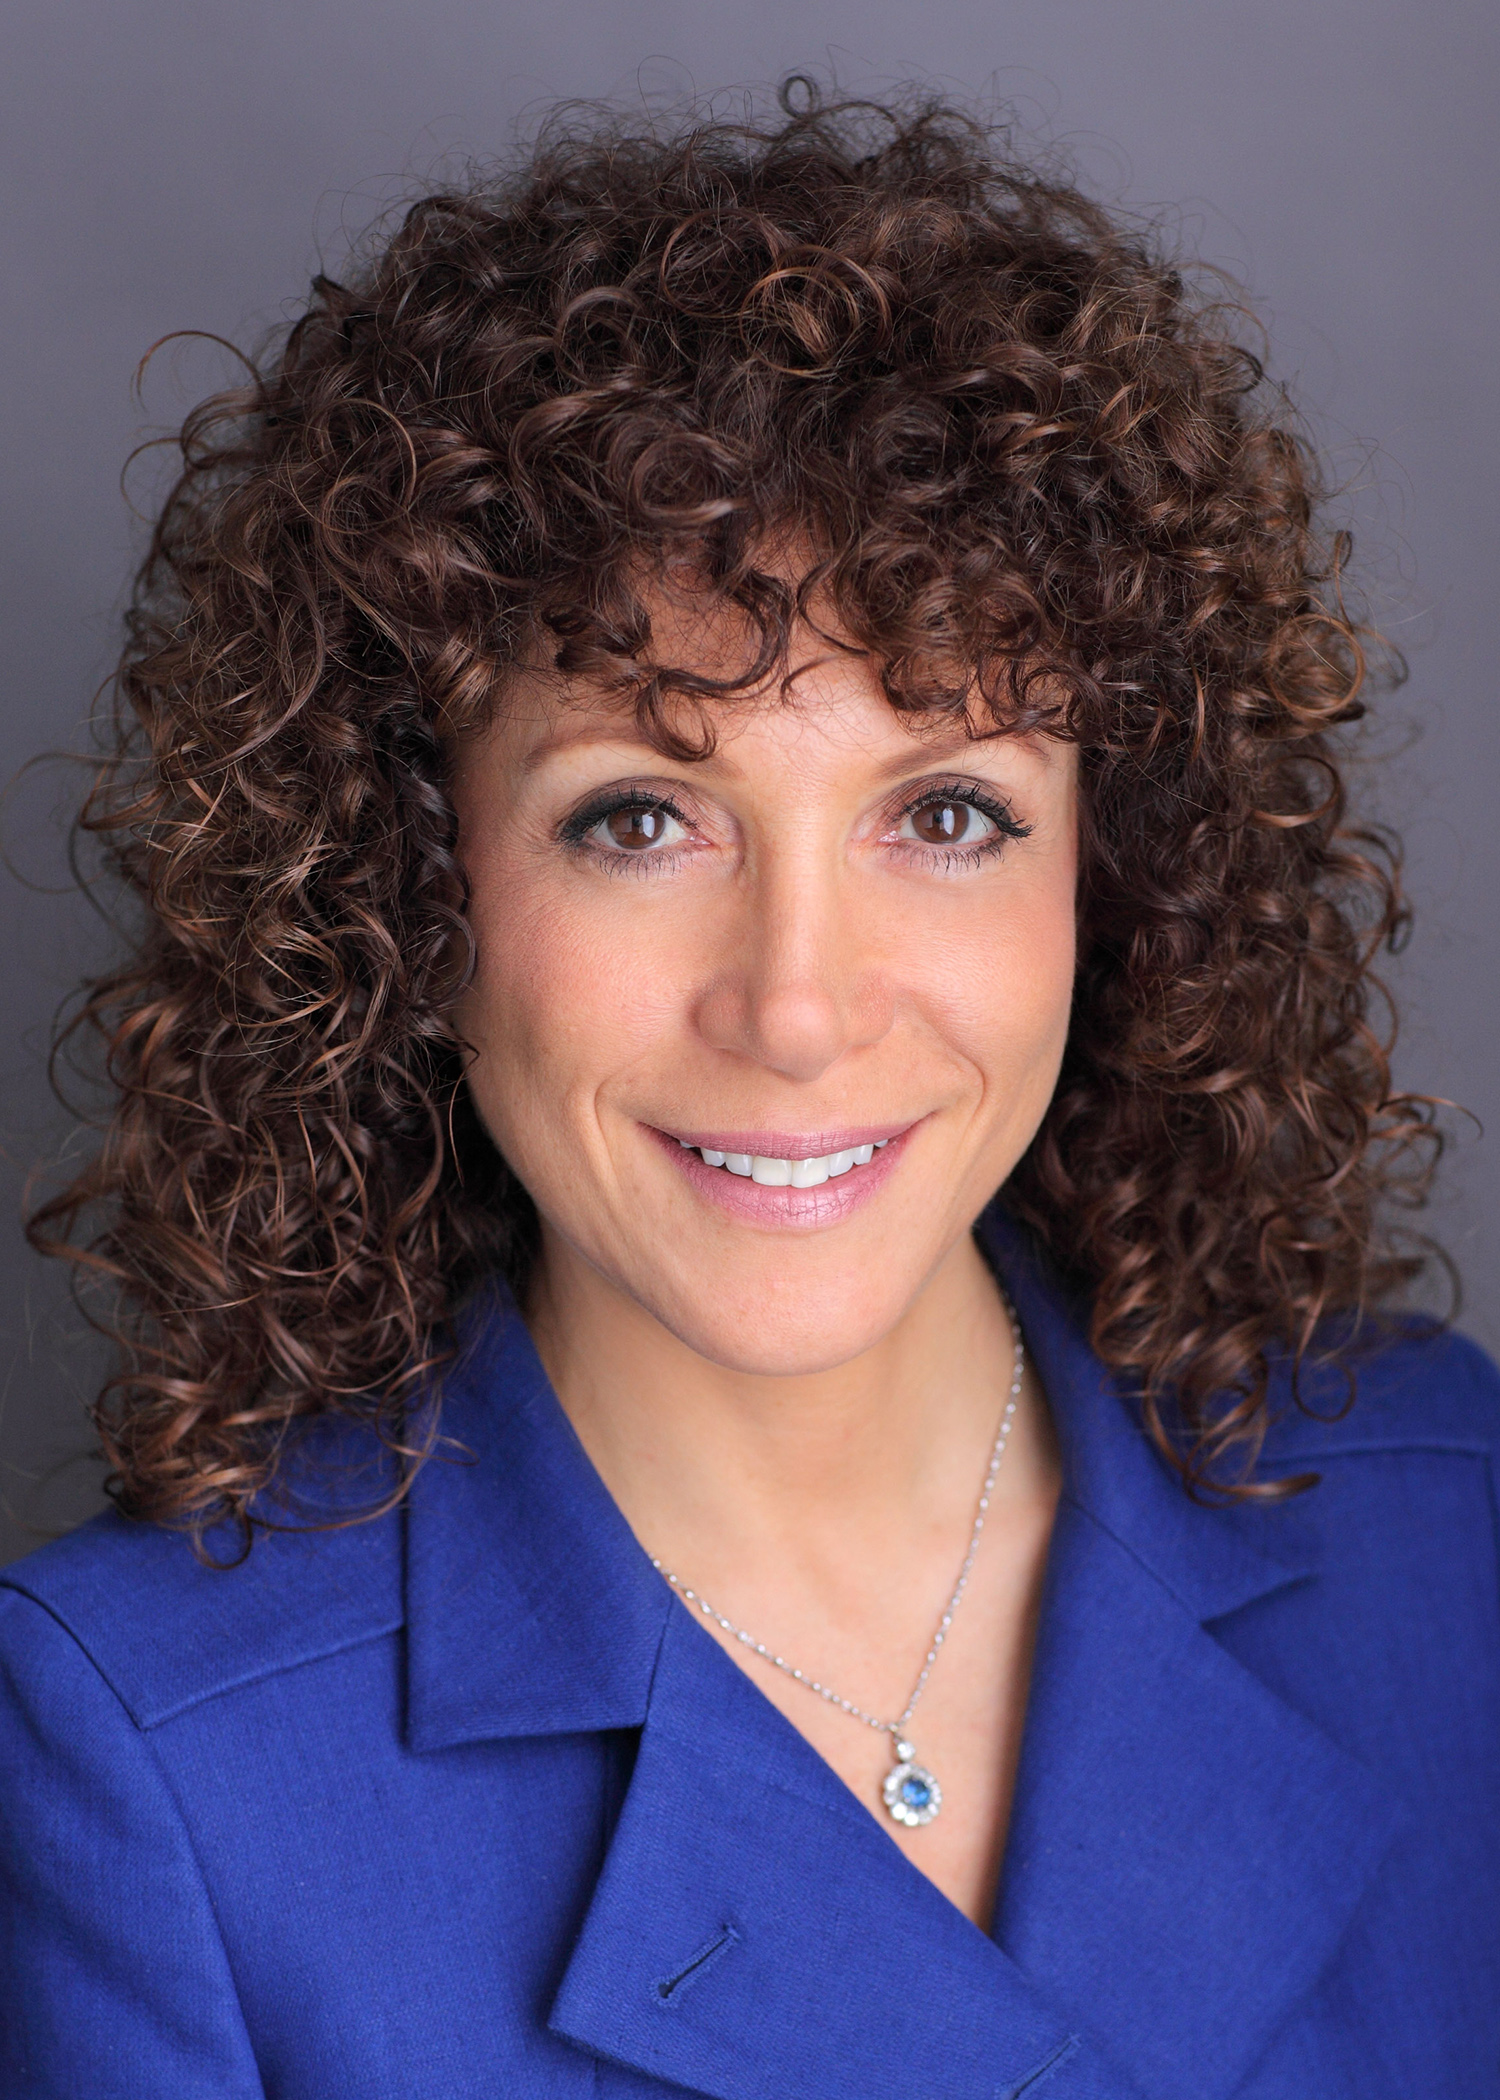 Sharon Klein is president of Wilmington Trust's New York Metropolitan Region.